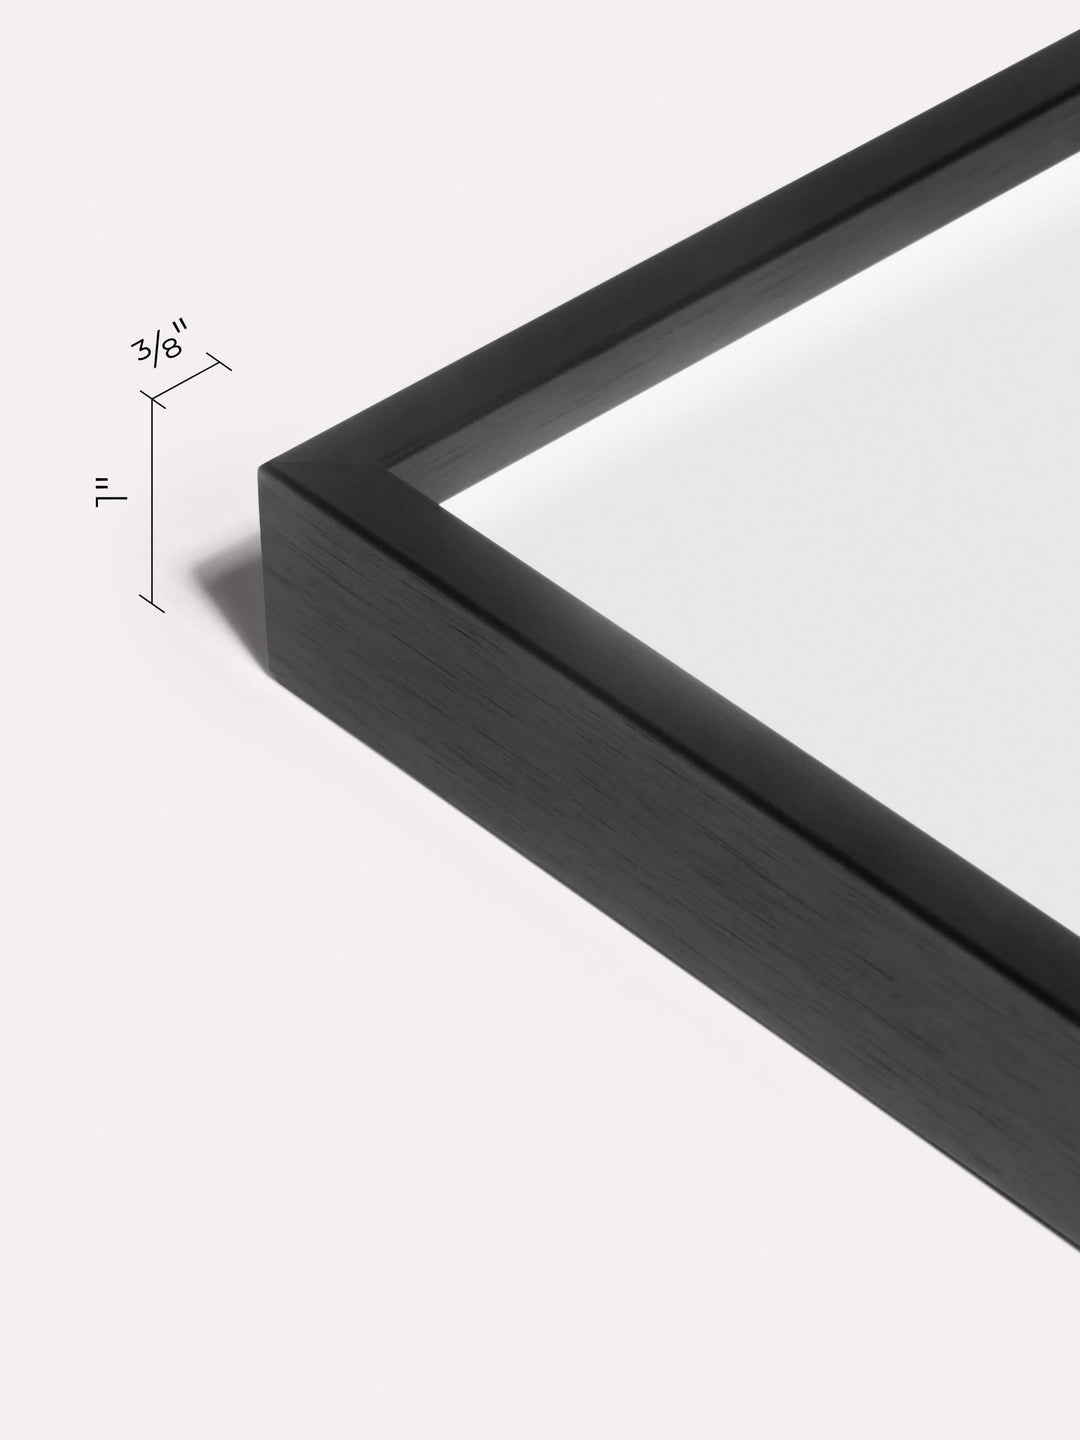 4x6-inch Thin Frame, Black - Close-up view